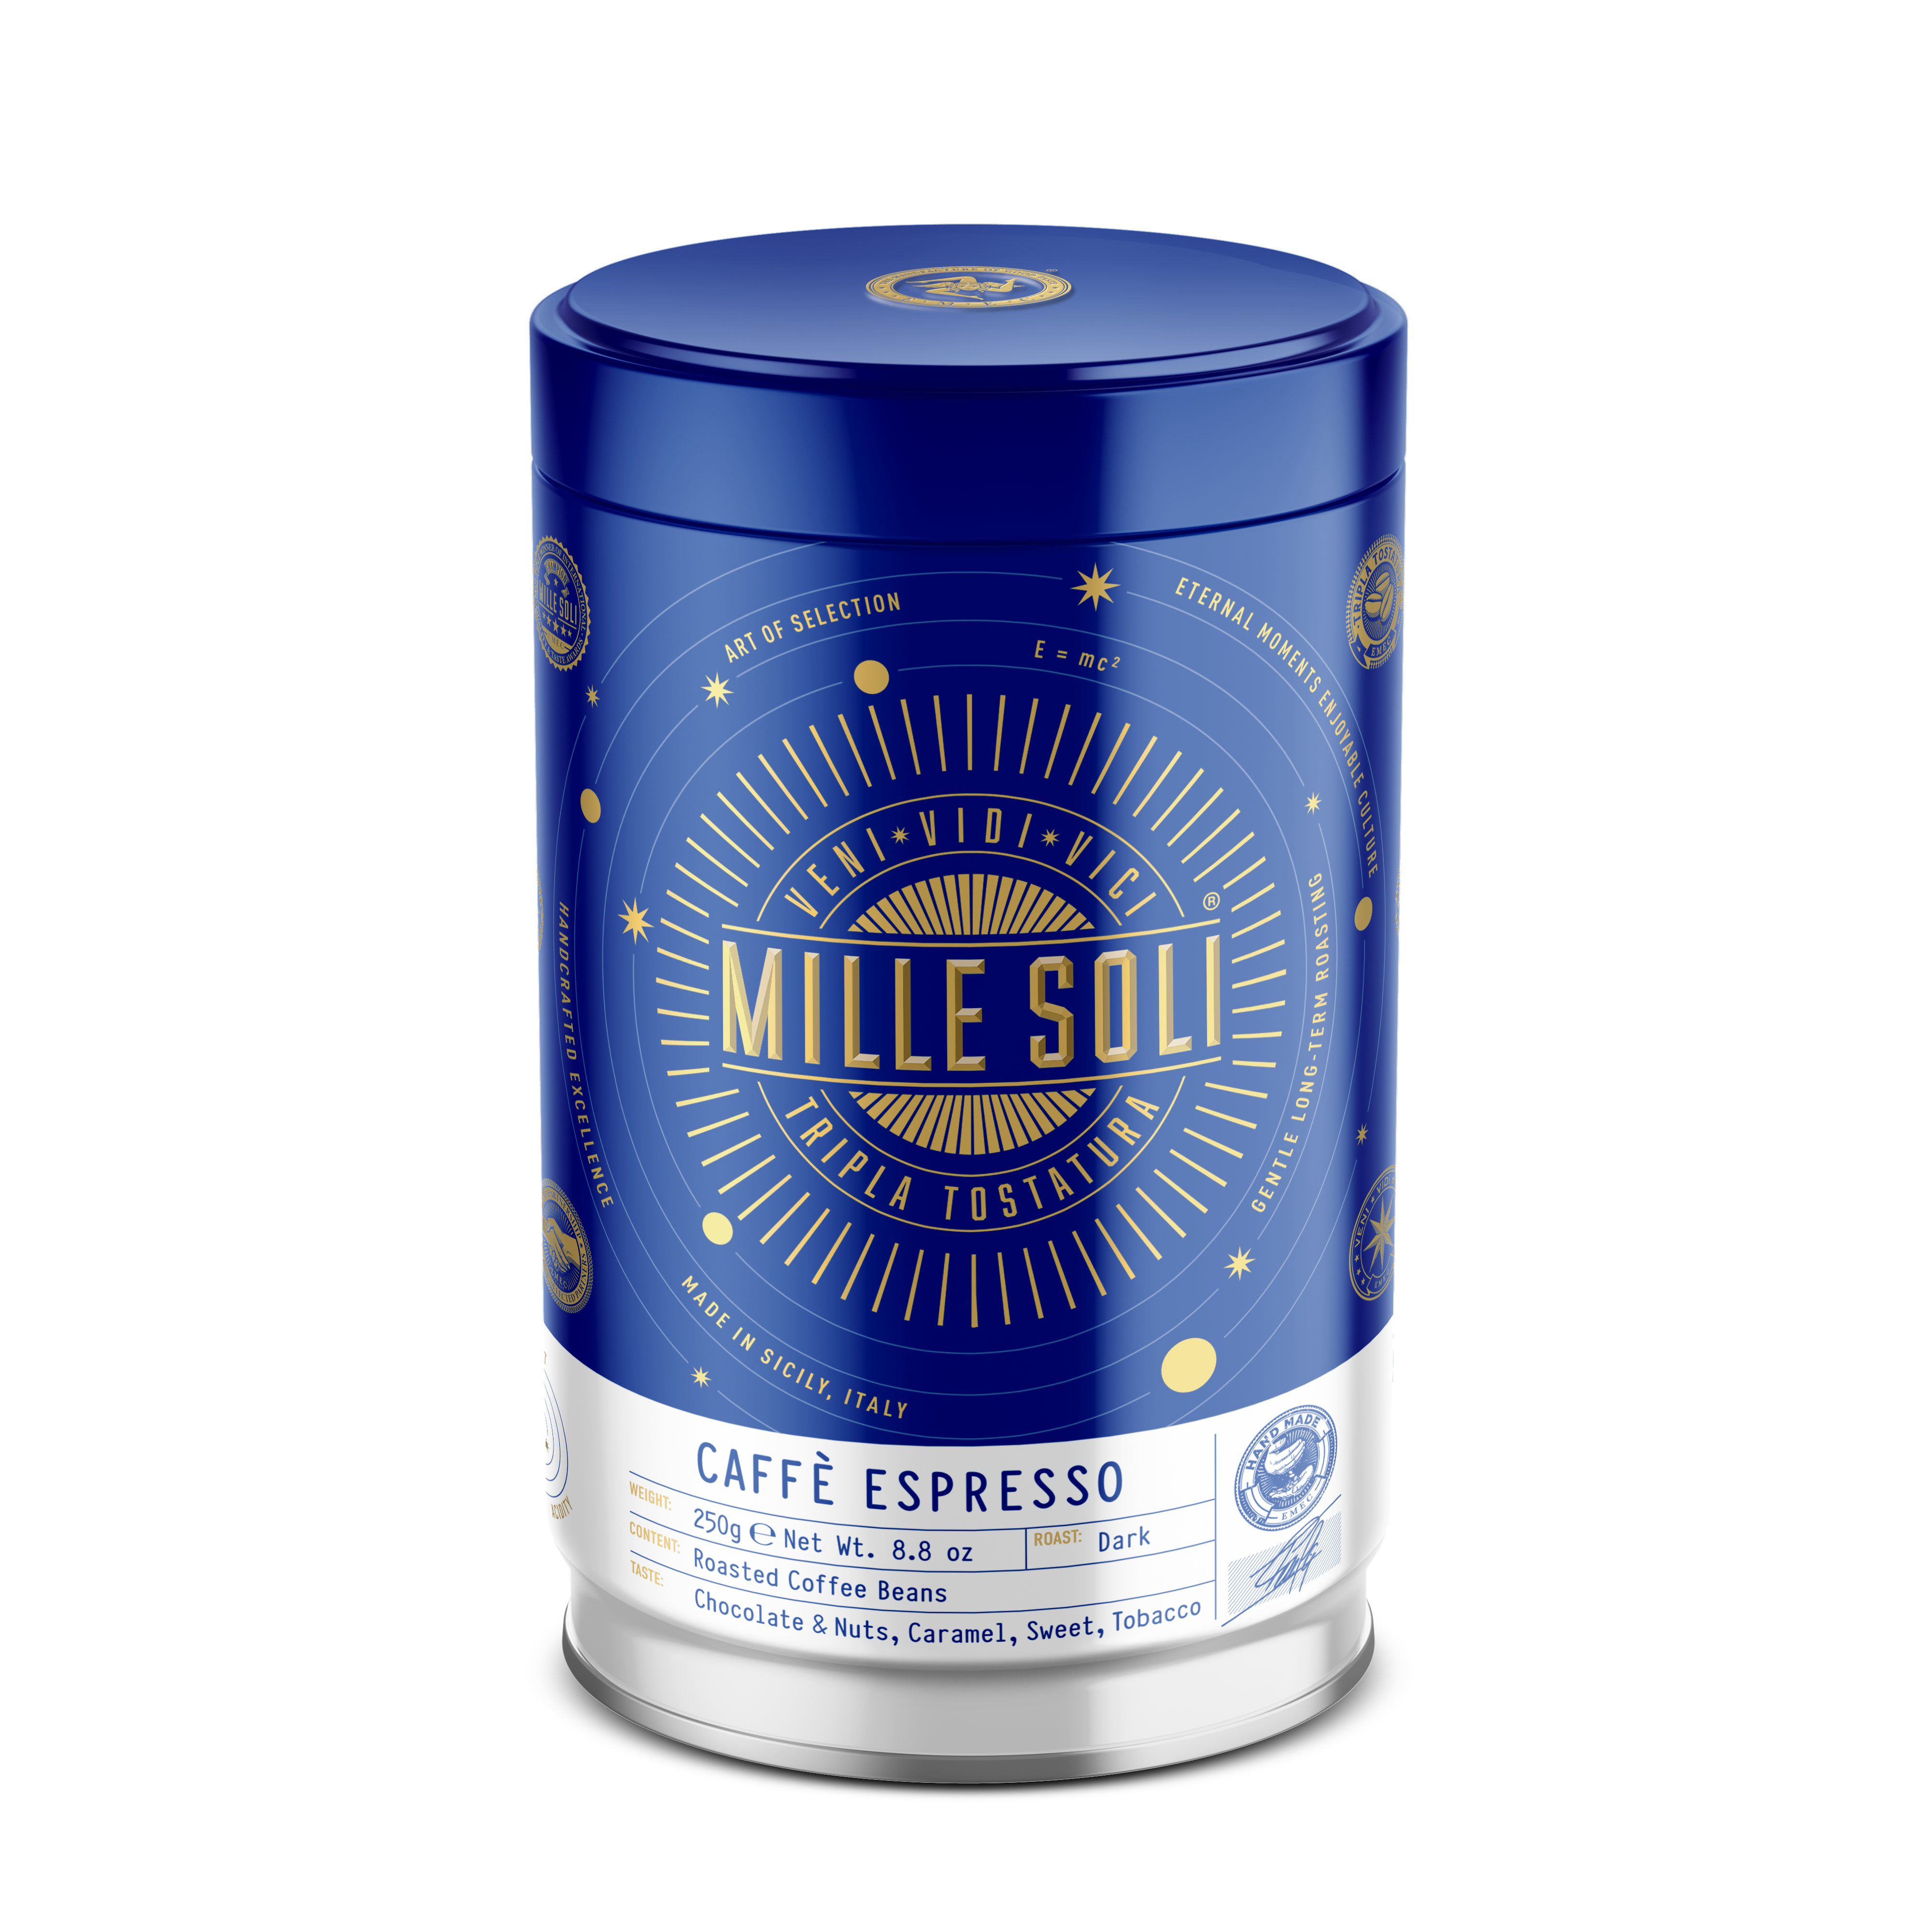 MILLE SOLI - Caffè Espresso - 250g - Beans